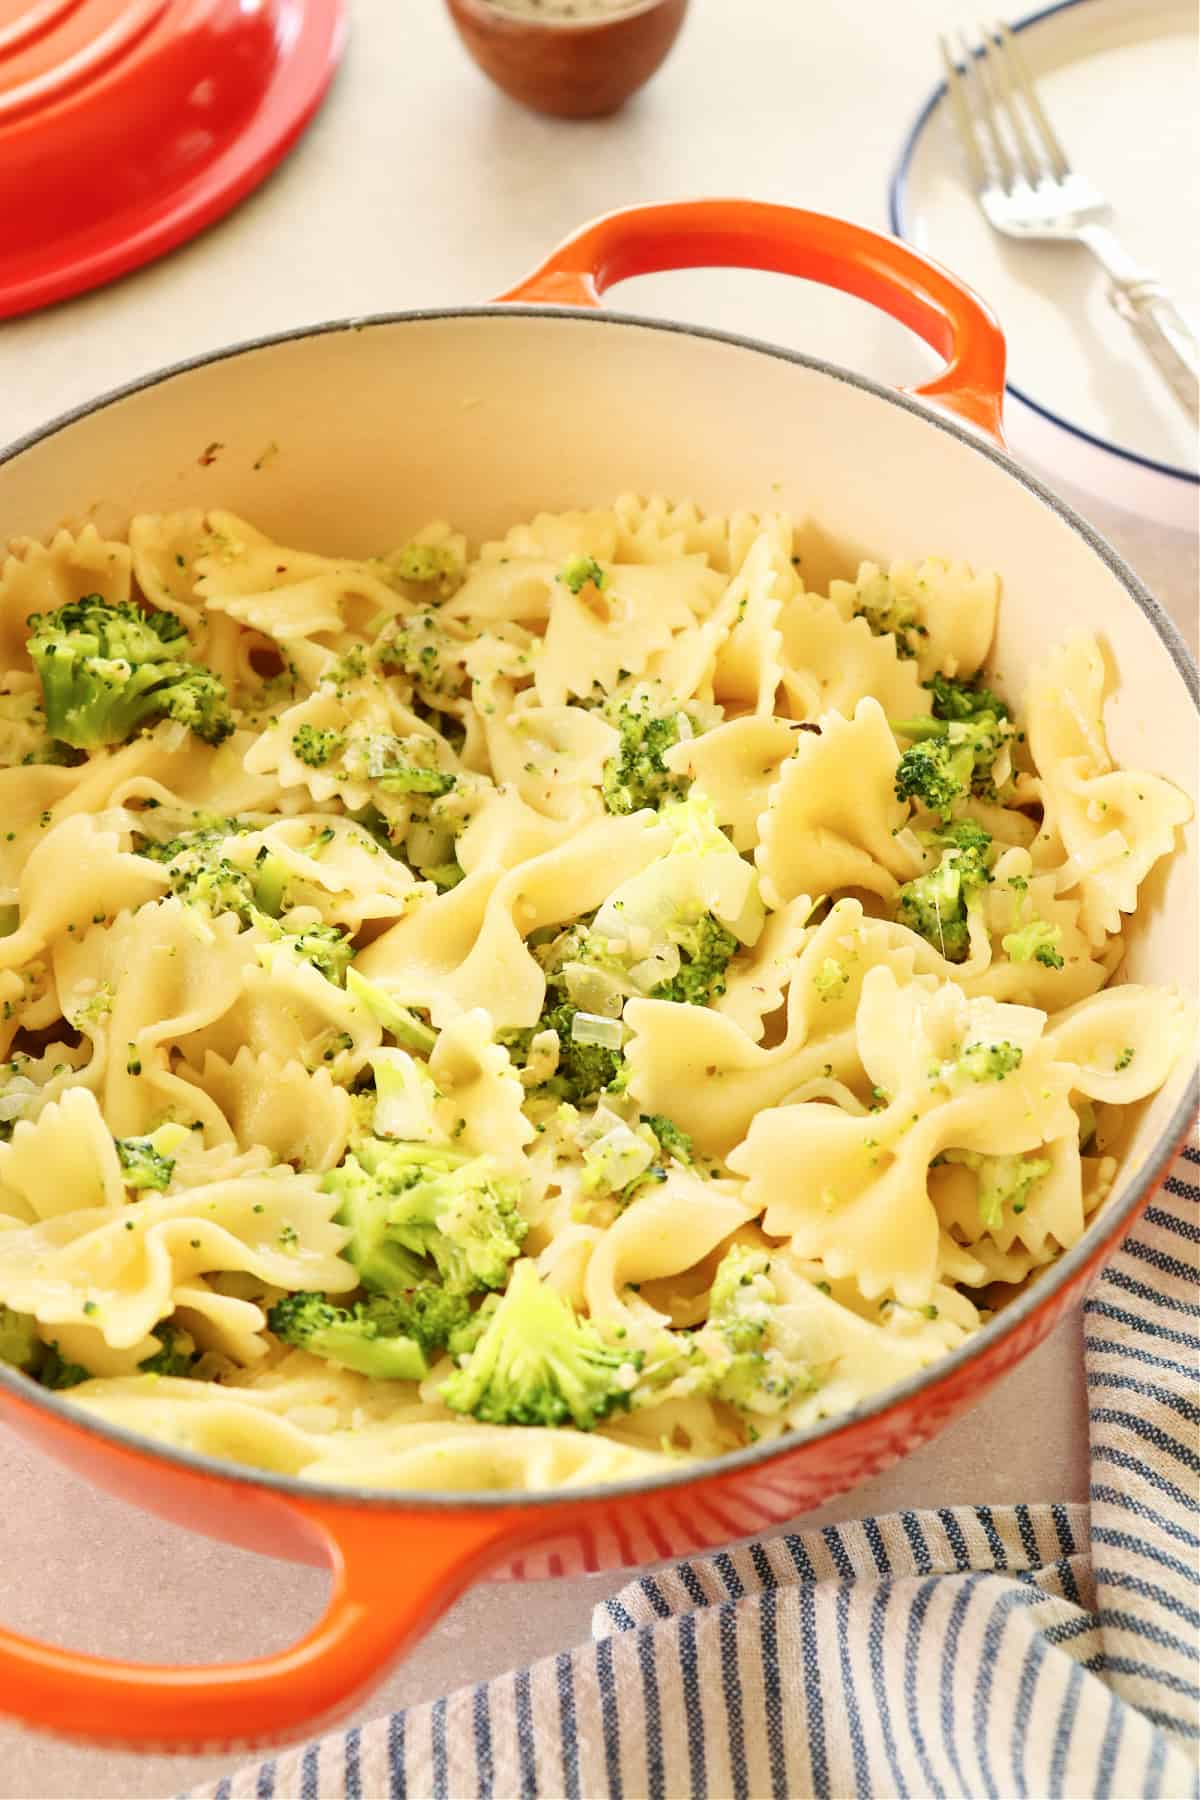 Broccoli pasta in a Le Creuset pan.